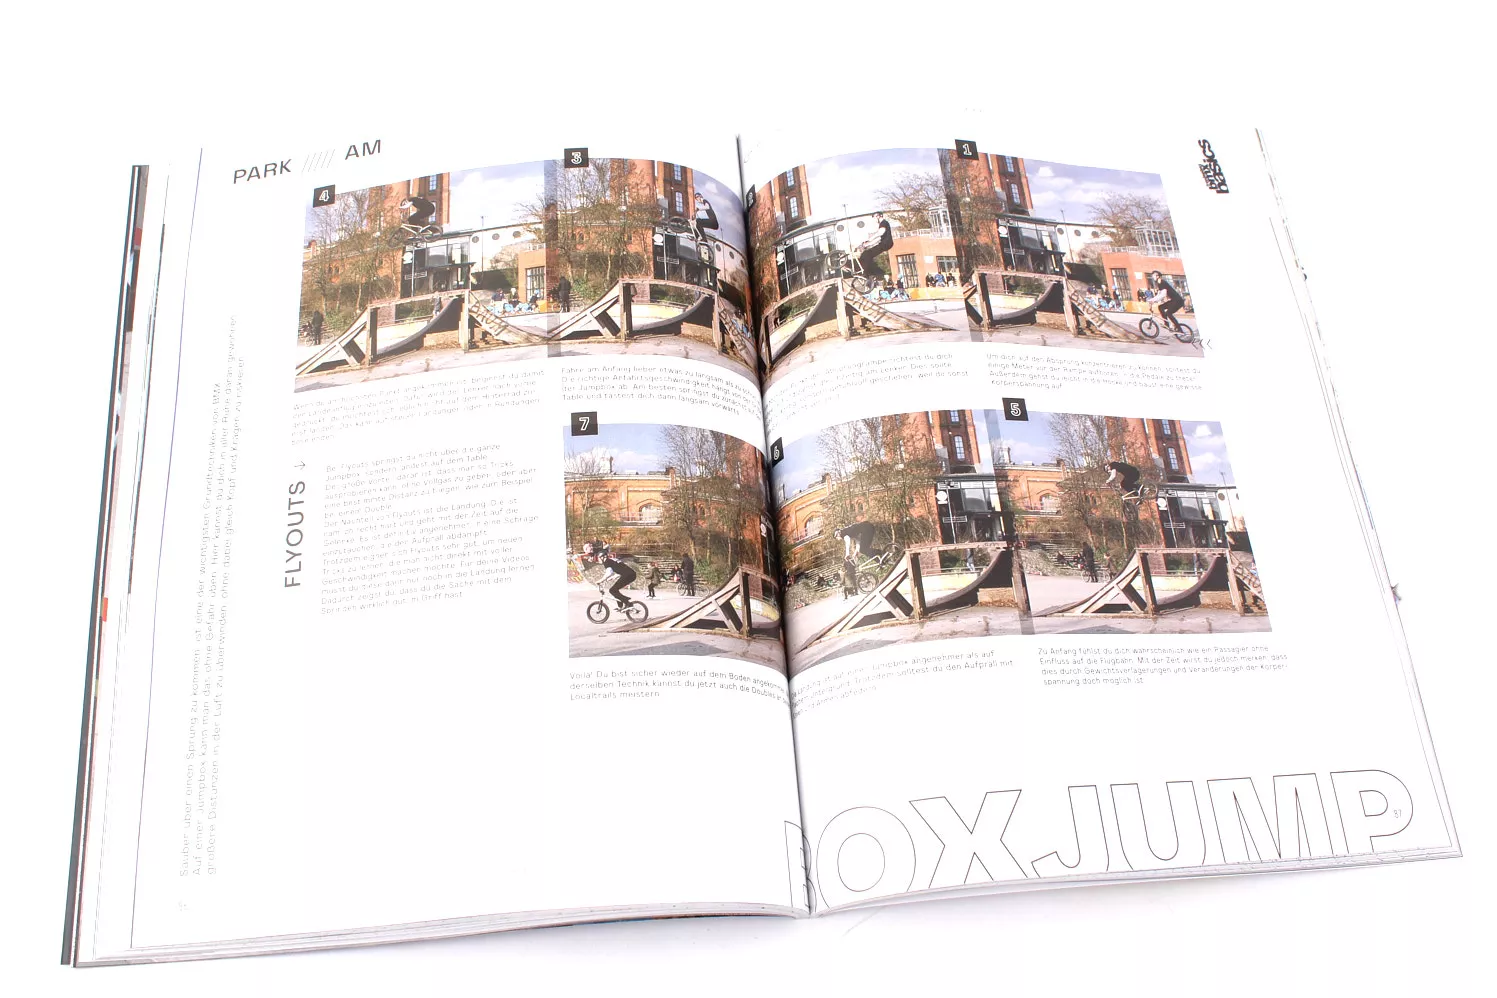 BMX Freedom magazine 148 pages